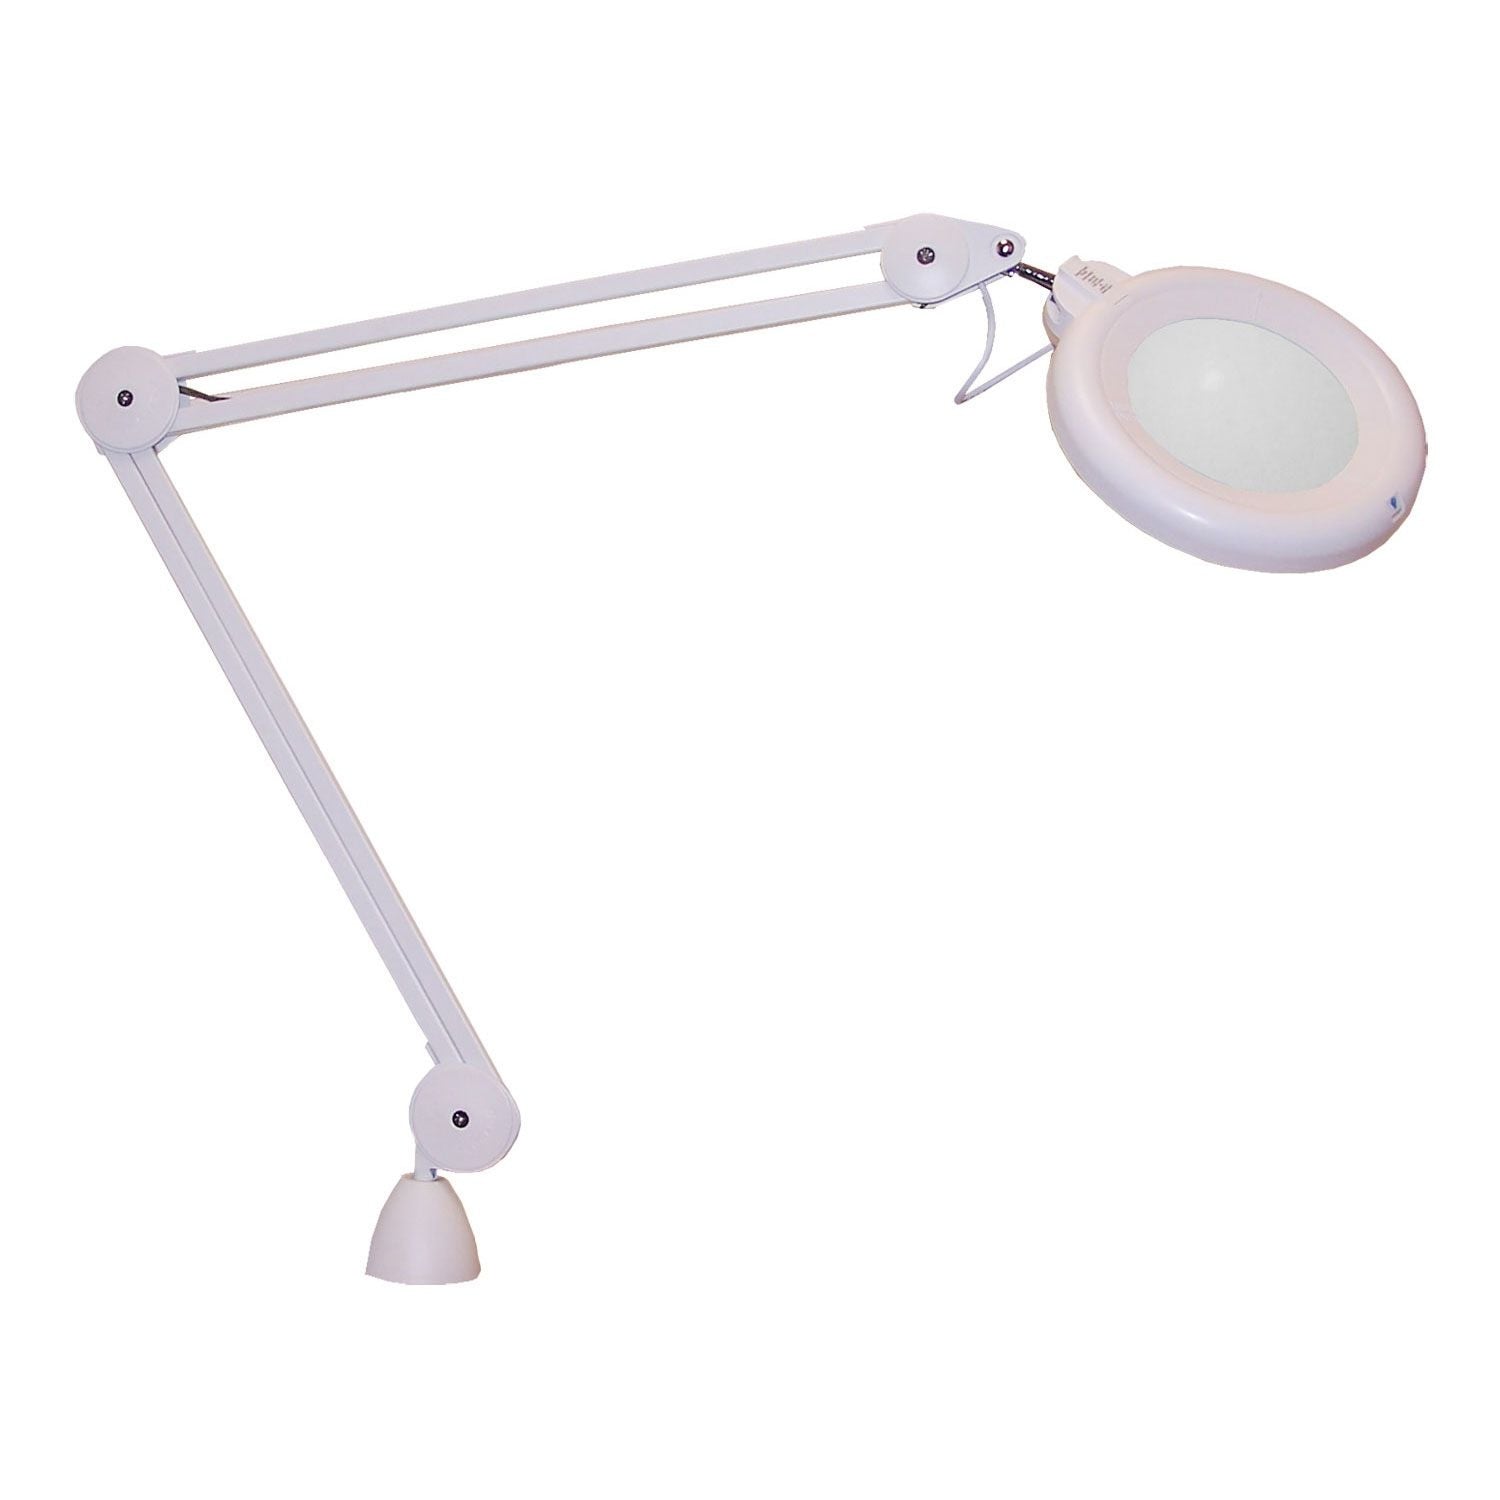 Slimline LED Magnifying Lamp